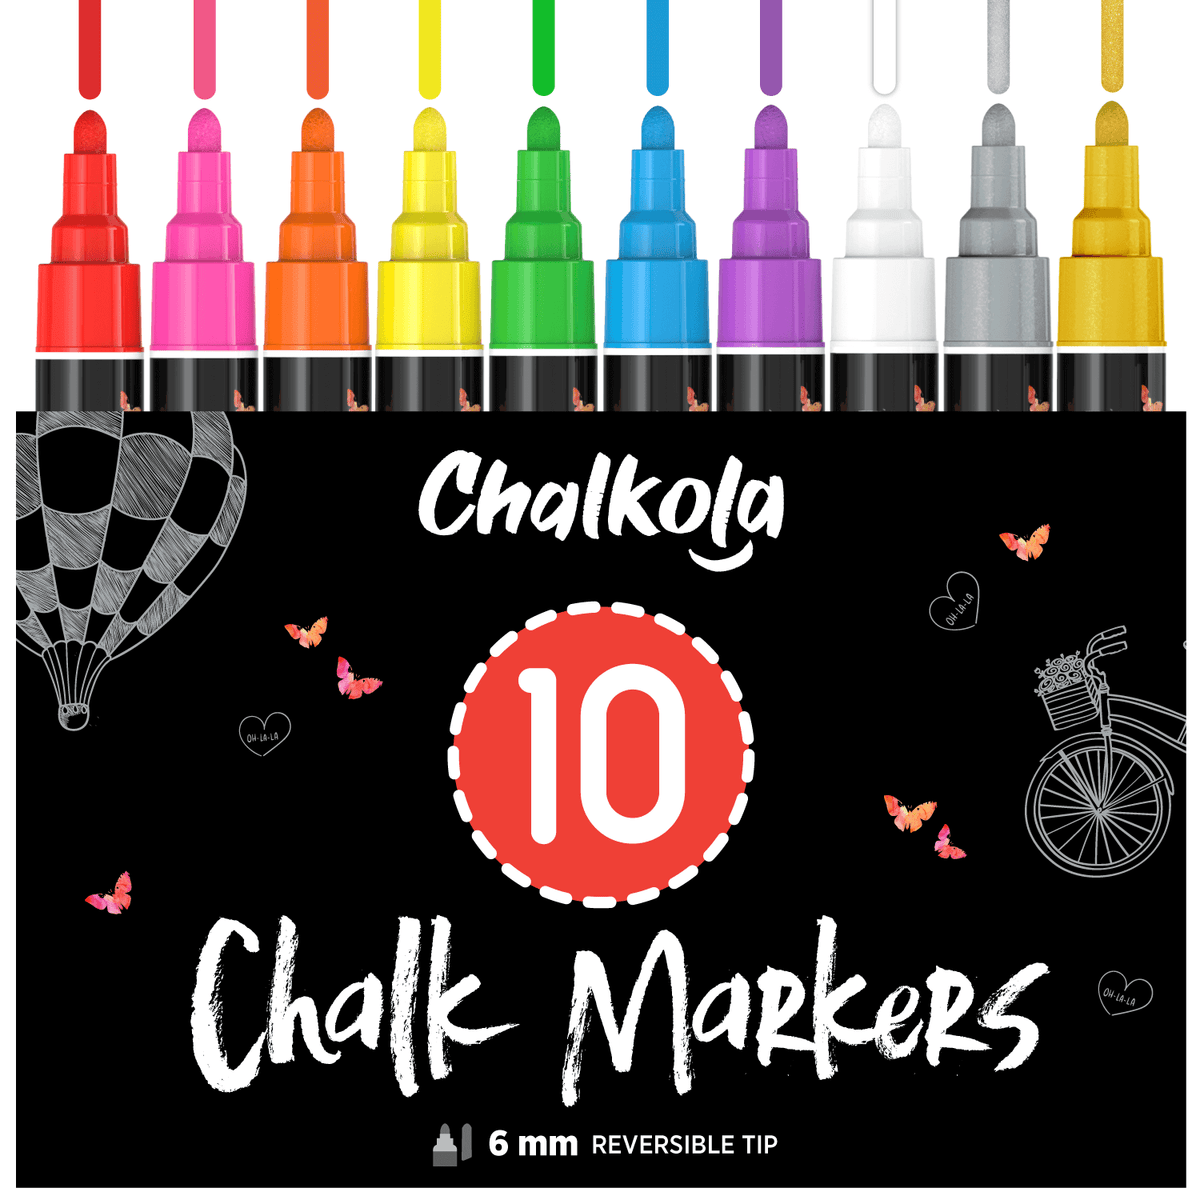 Bundle: 1mm Chalk Markers - Extra Fine Nib  Neon & Earth Colors - Chalkola  Art Supply